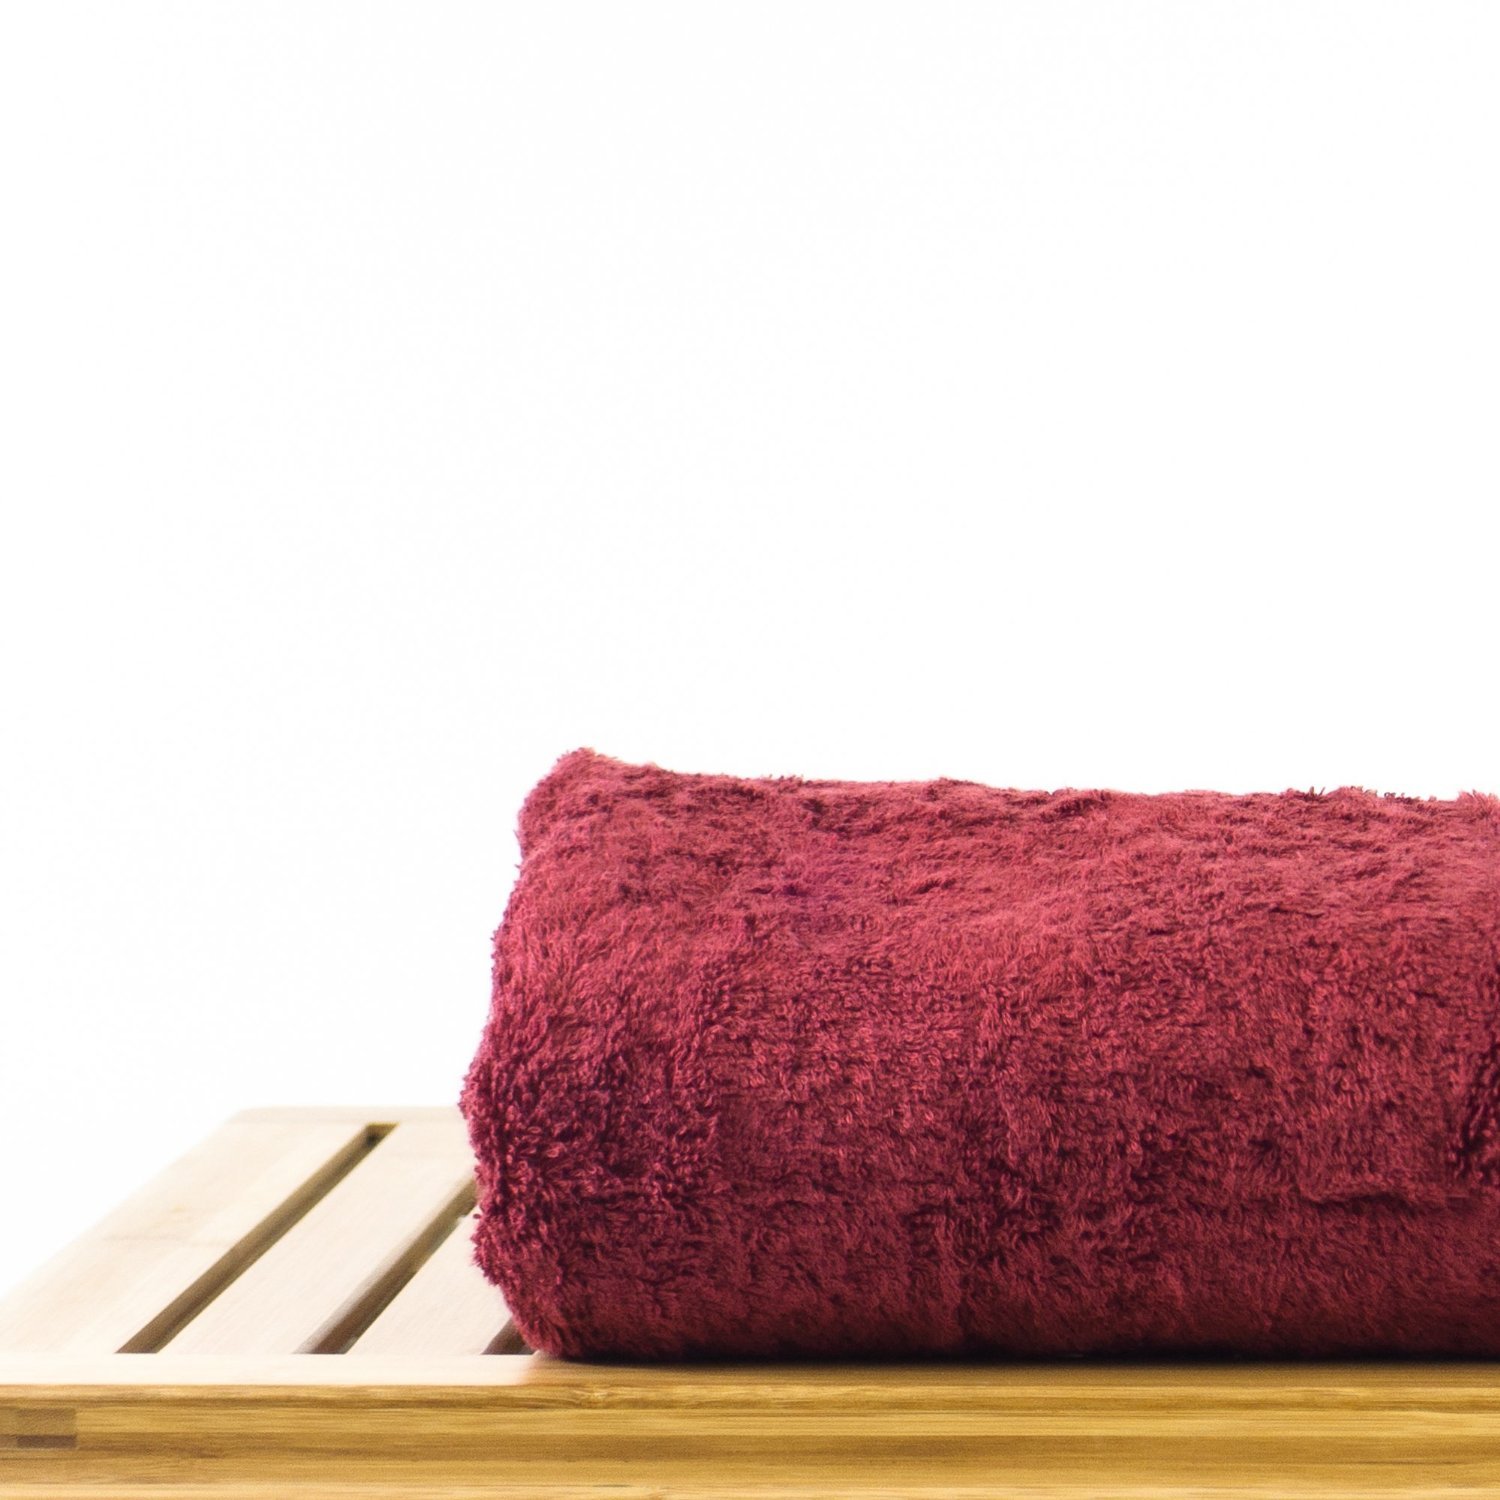 27" x 54" - 17 lbs/doz - %100 Turkish Cotton Cranberry Bath Towel - Dobby Border-Robemart.com